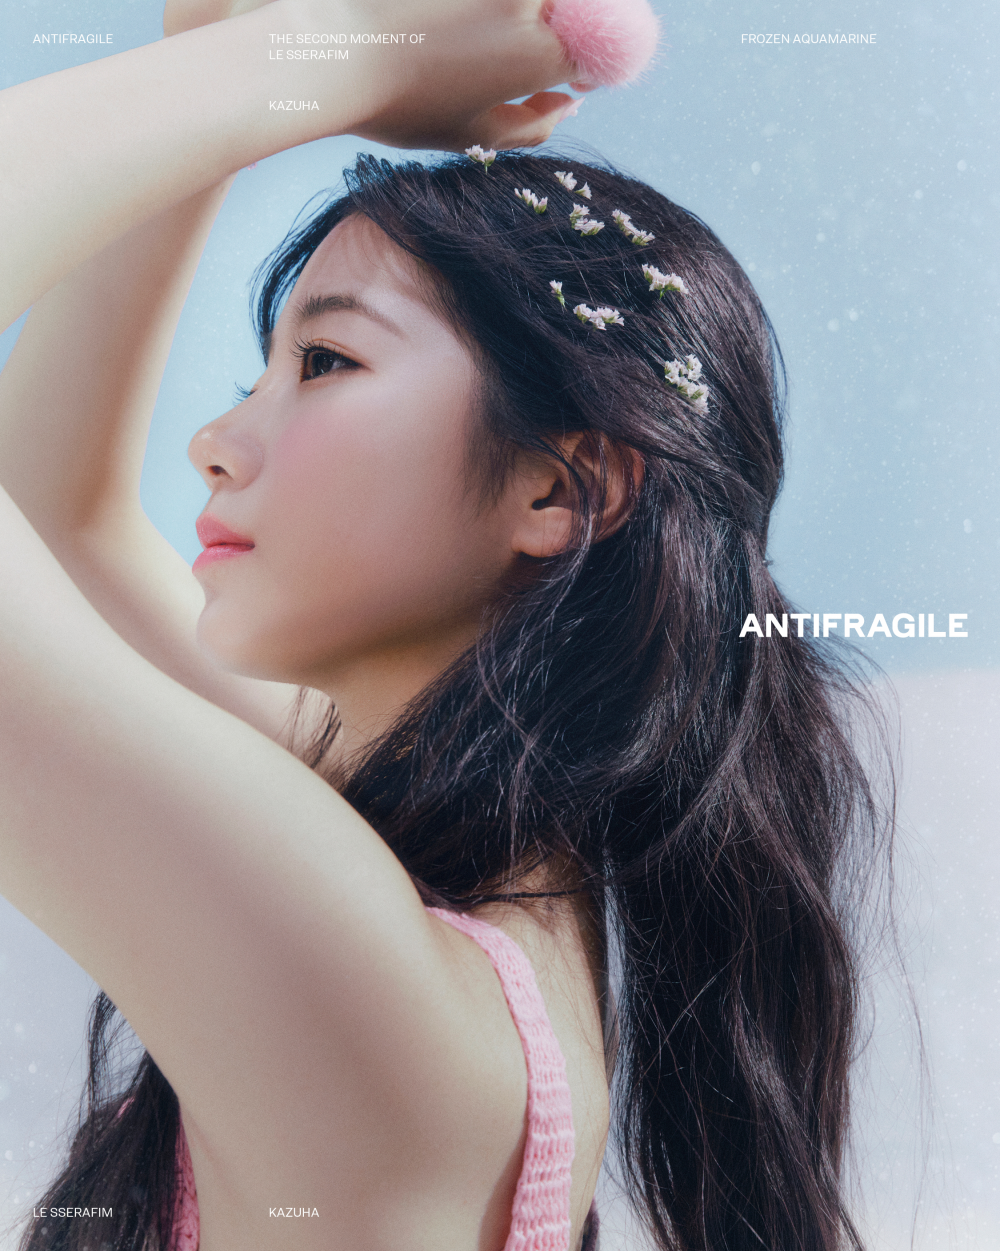 [Камбэк] LE SSERAFIM мини-альбом "ANTIFRAGILE": загадочные трек-сэмплы